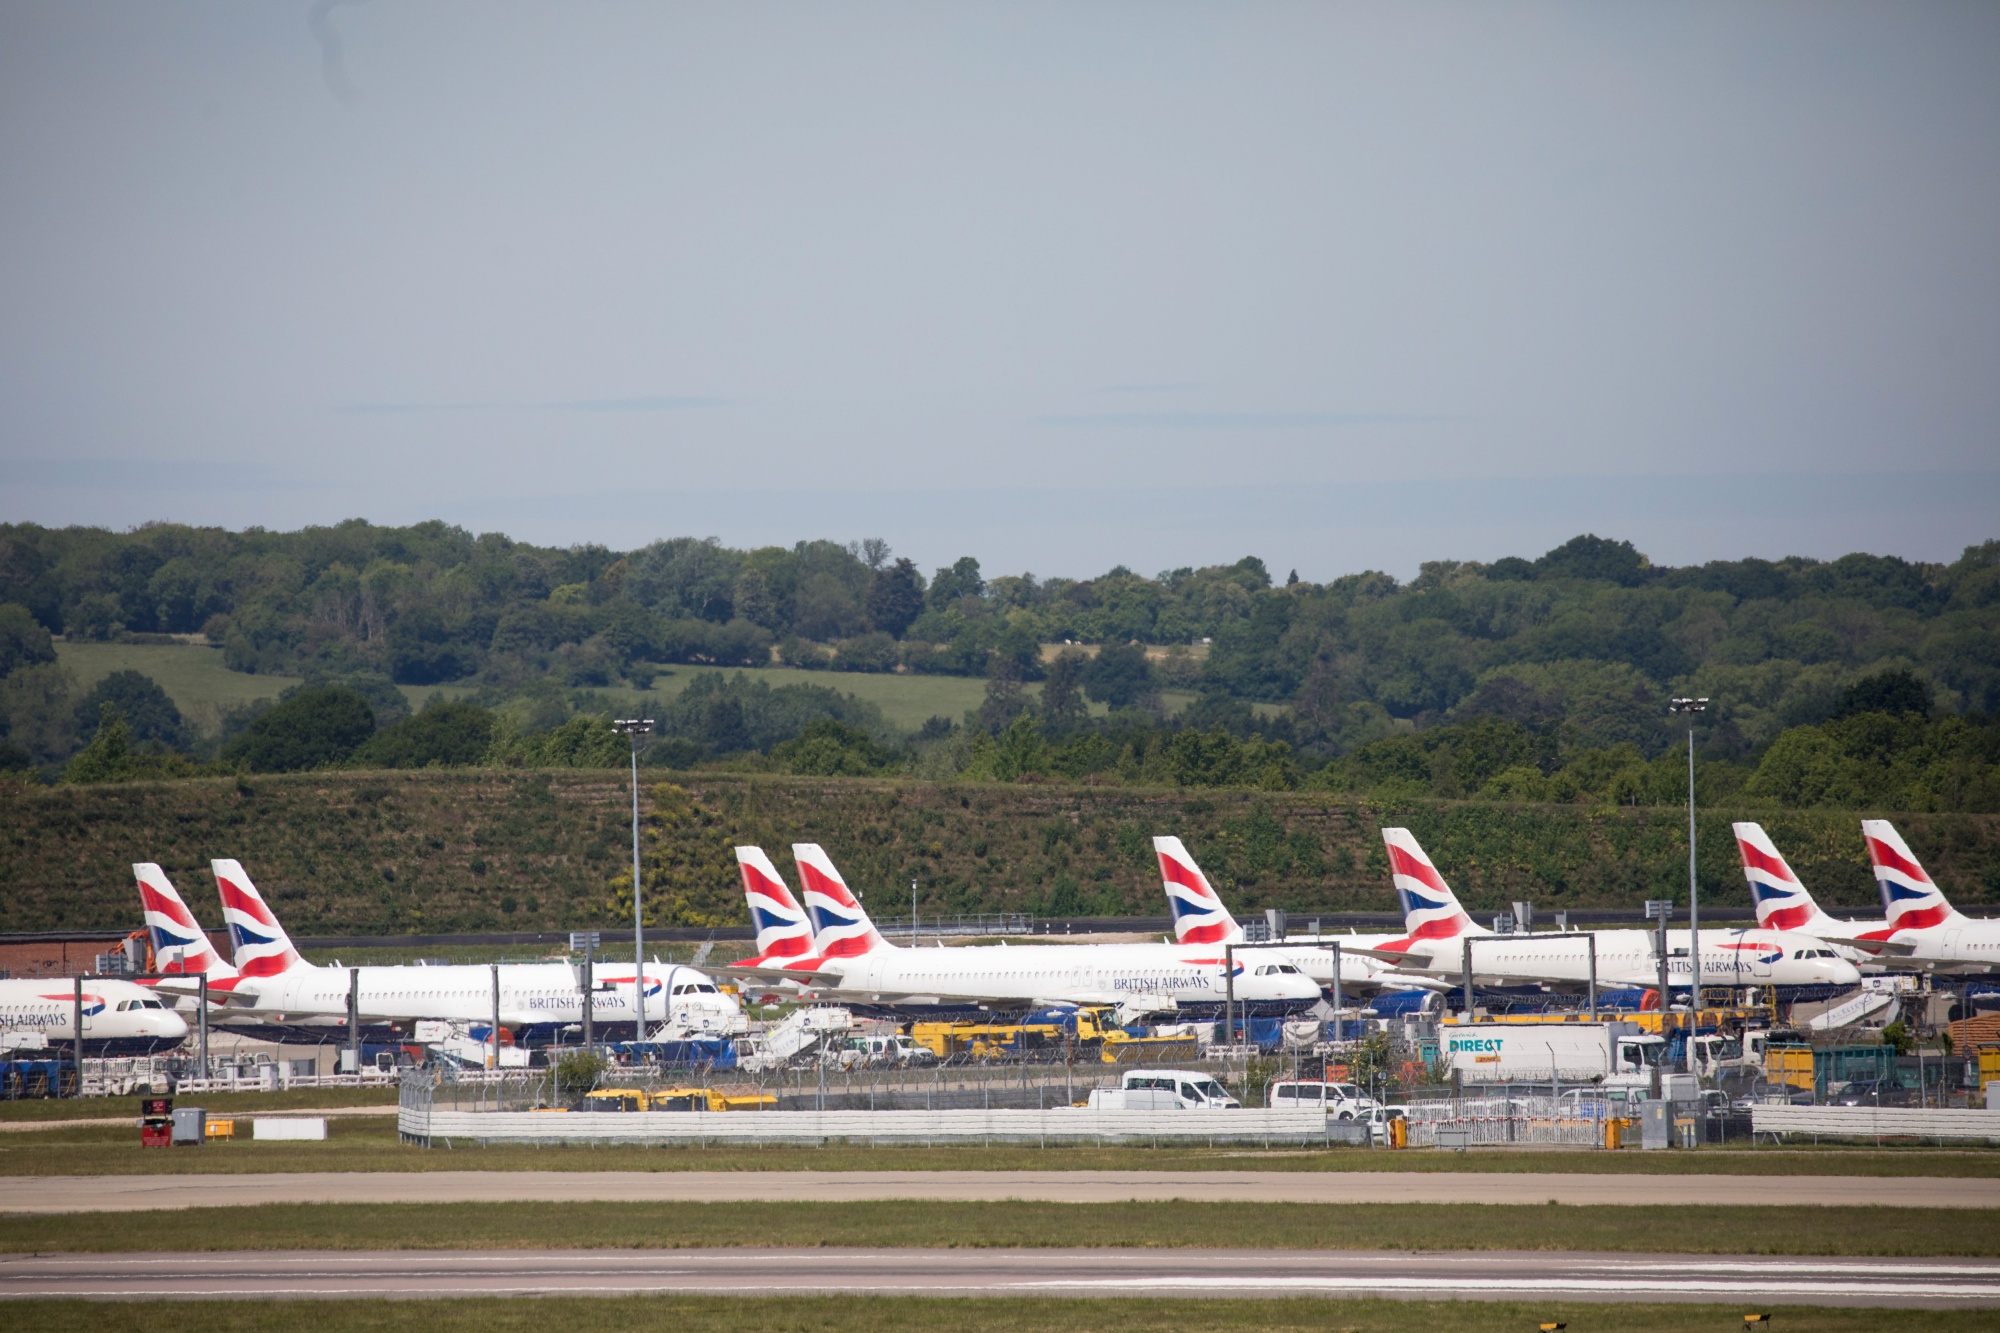 British Airways pkanes on the tarmac at London Gatwick Airport.